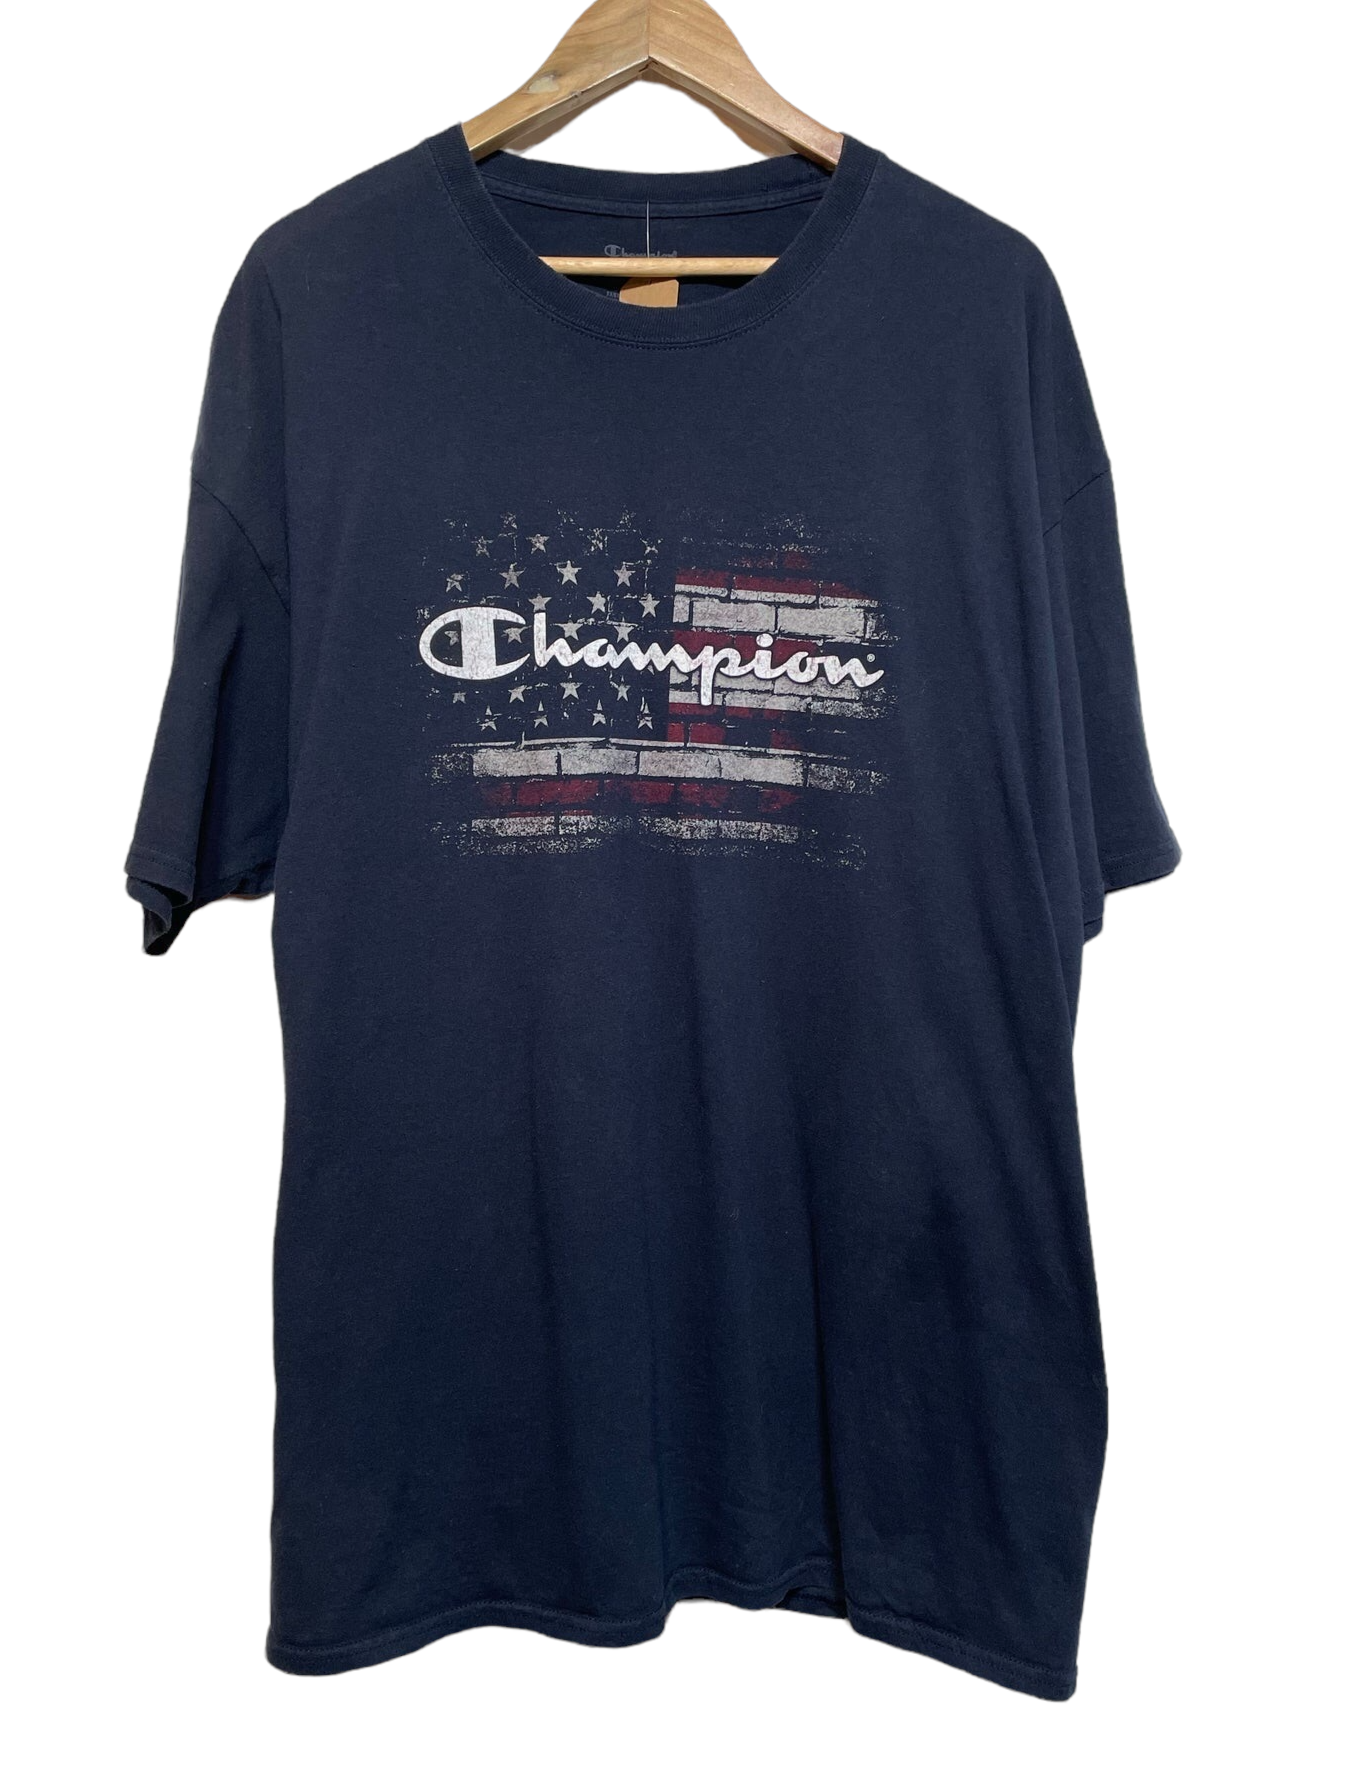 Champion Flag T-Shirt (Size XL)